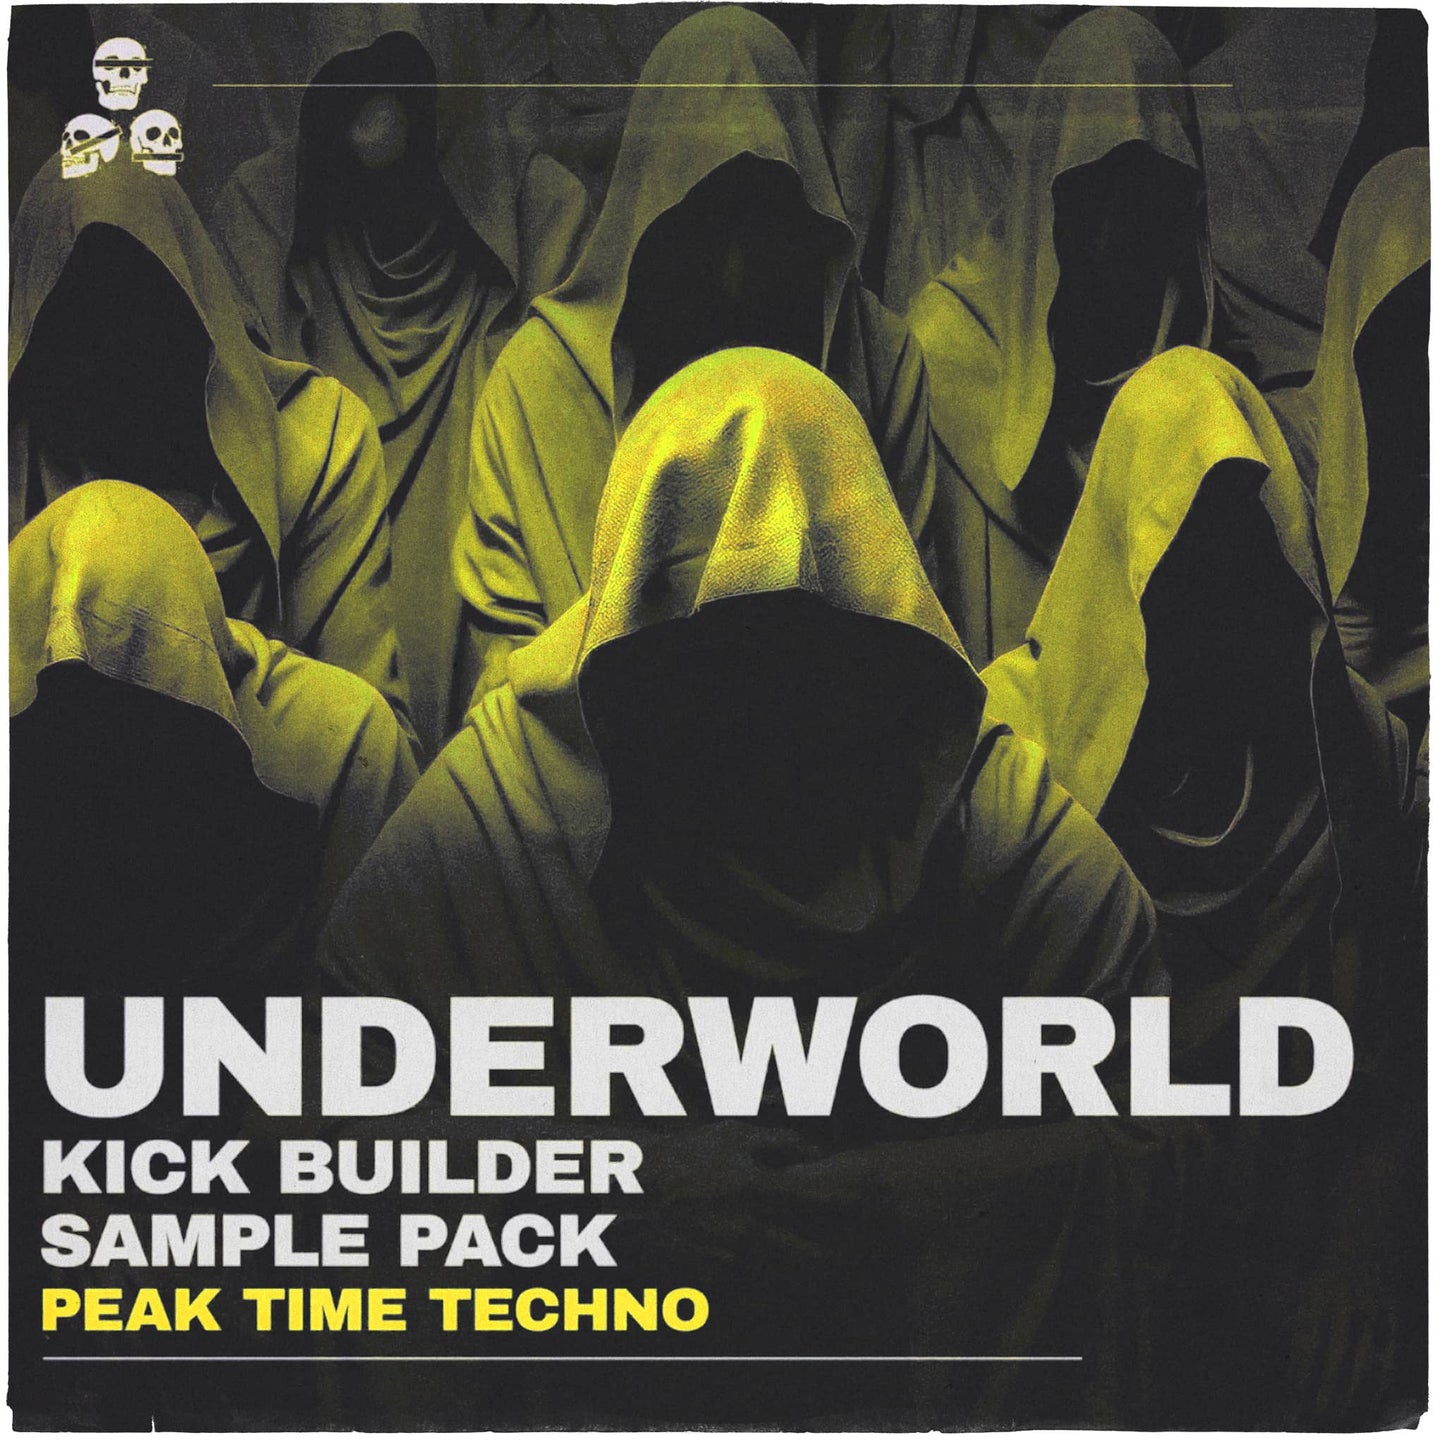 Underworld Techno Kick Builder Sample Pack - Peak Time Techno